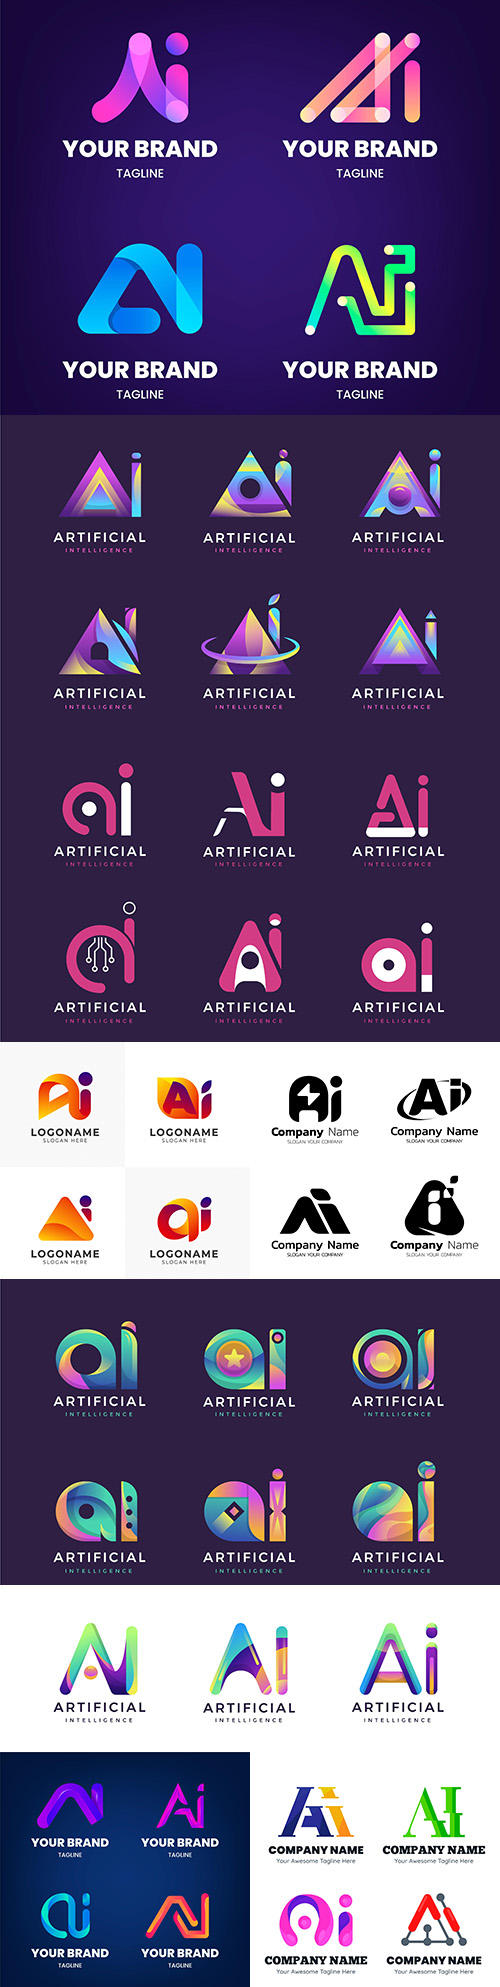 Brand name company business corporate logos design 23
